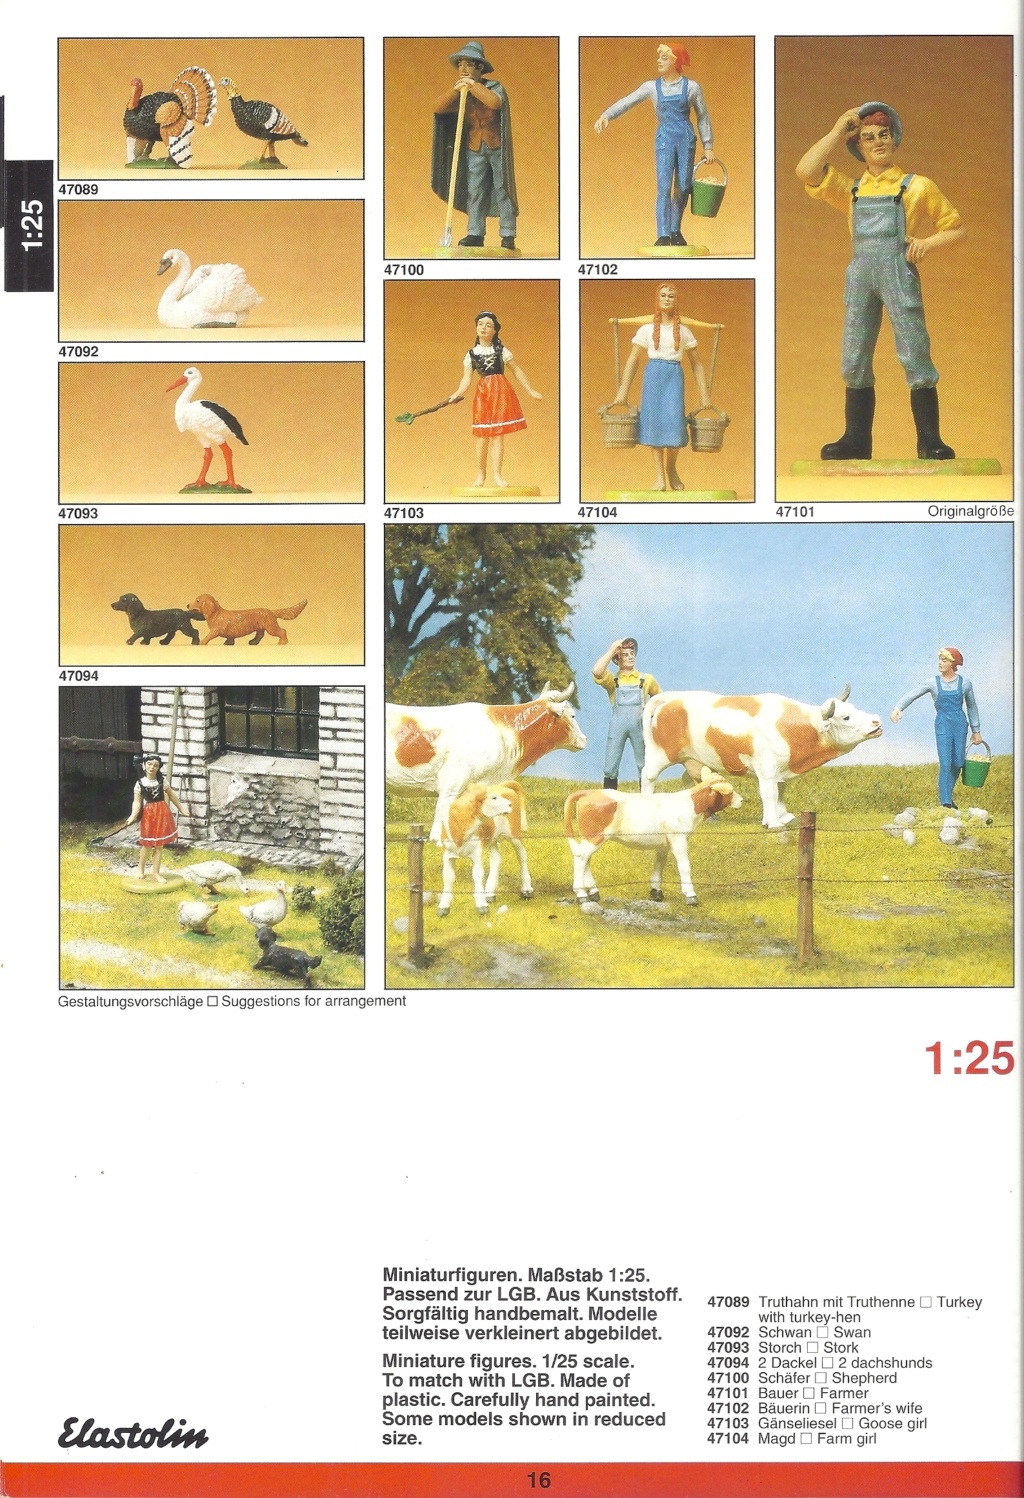 [PREISER 1996] Catalogue elastolin 1996 Preis156